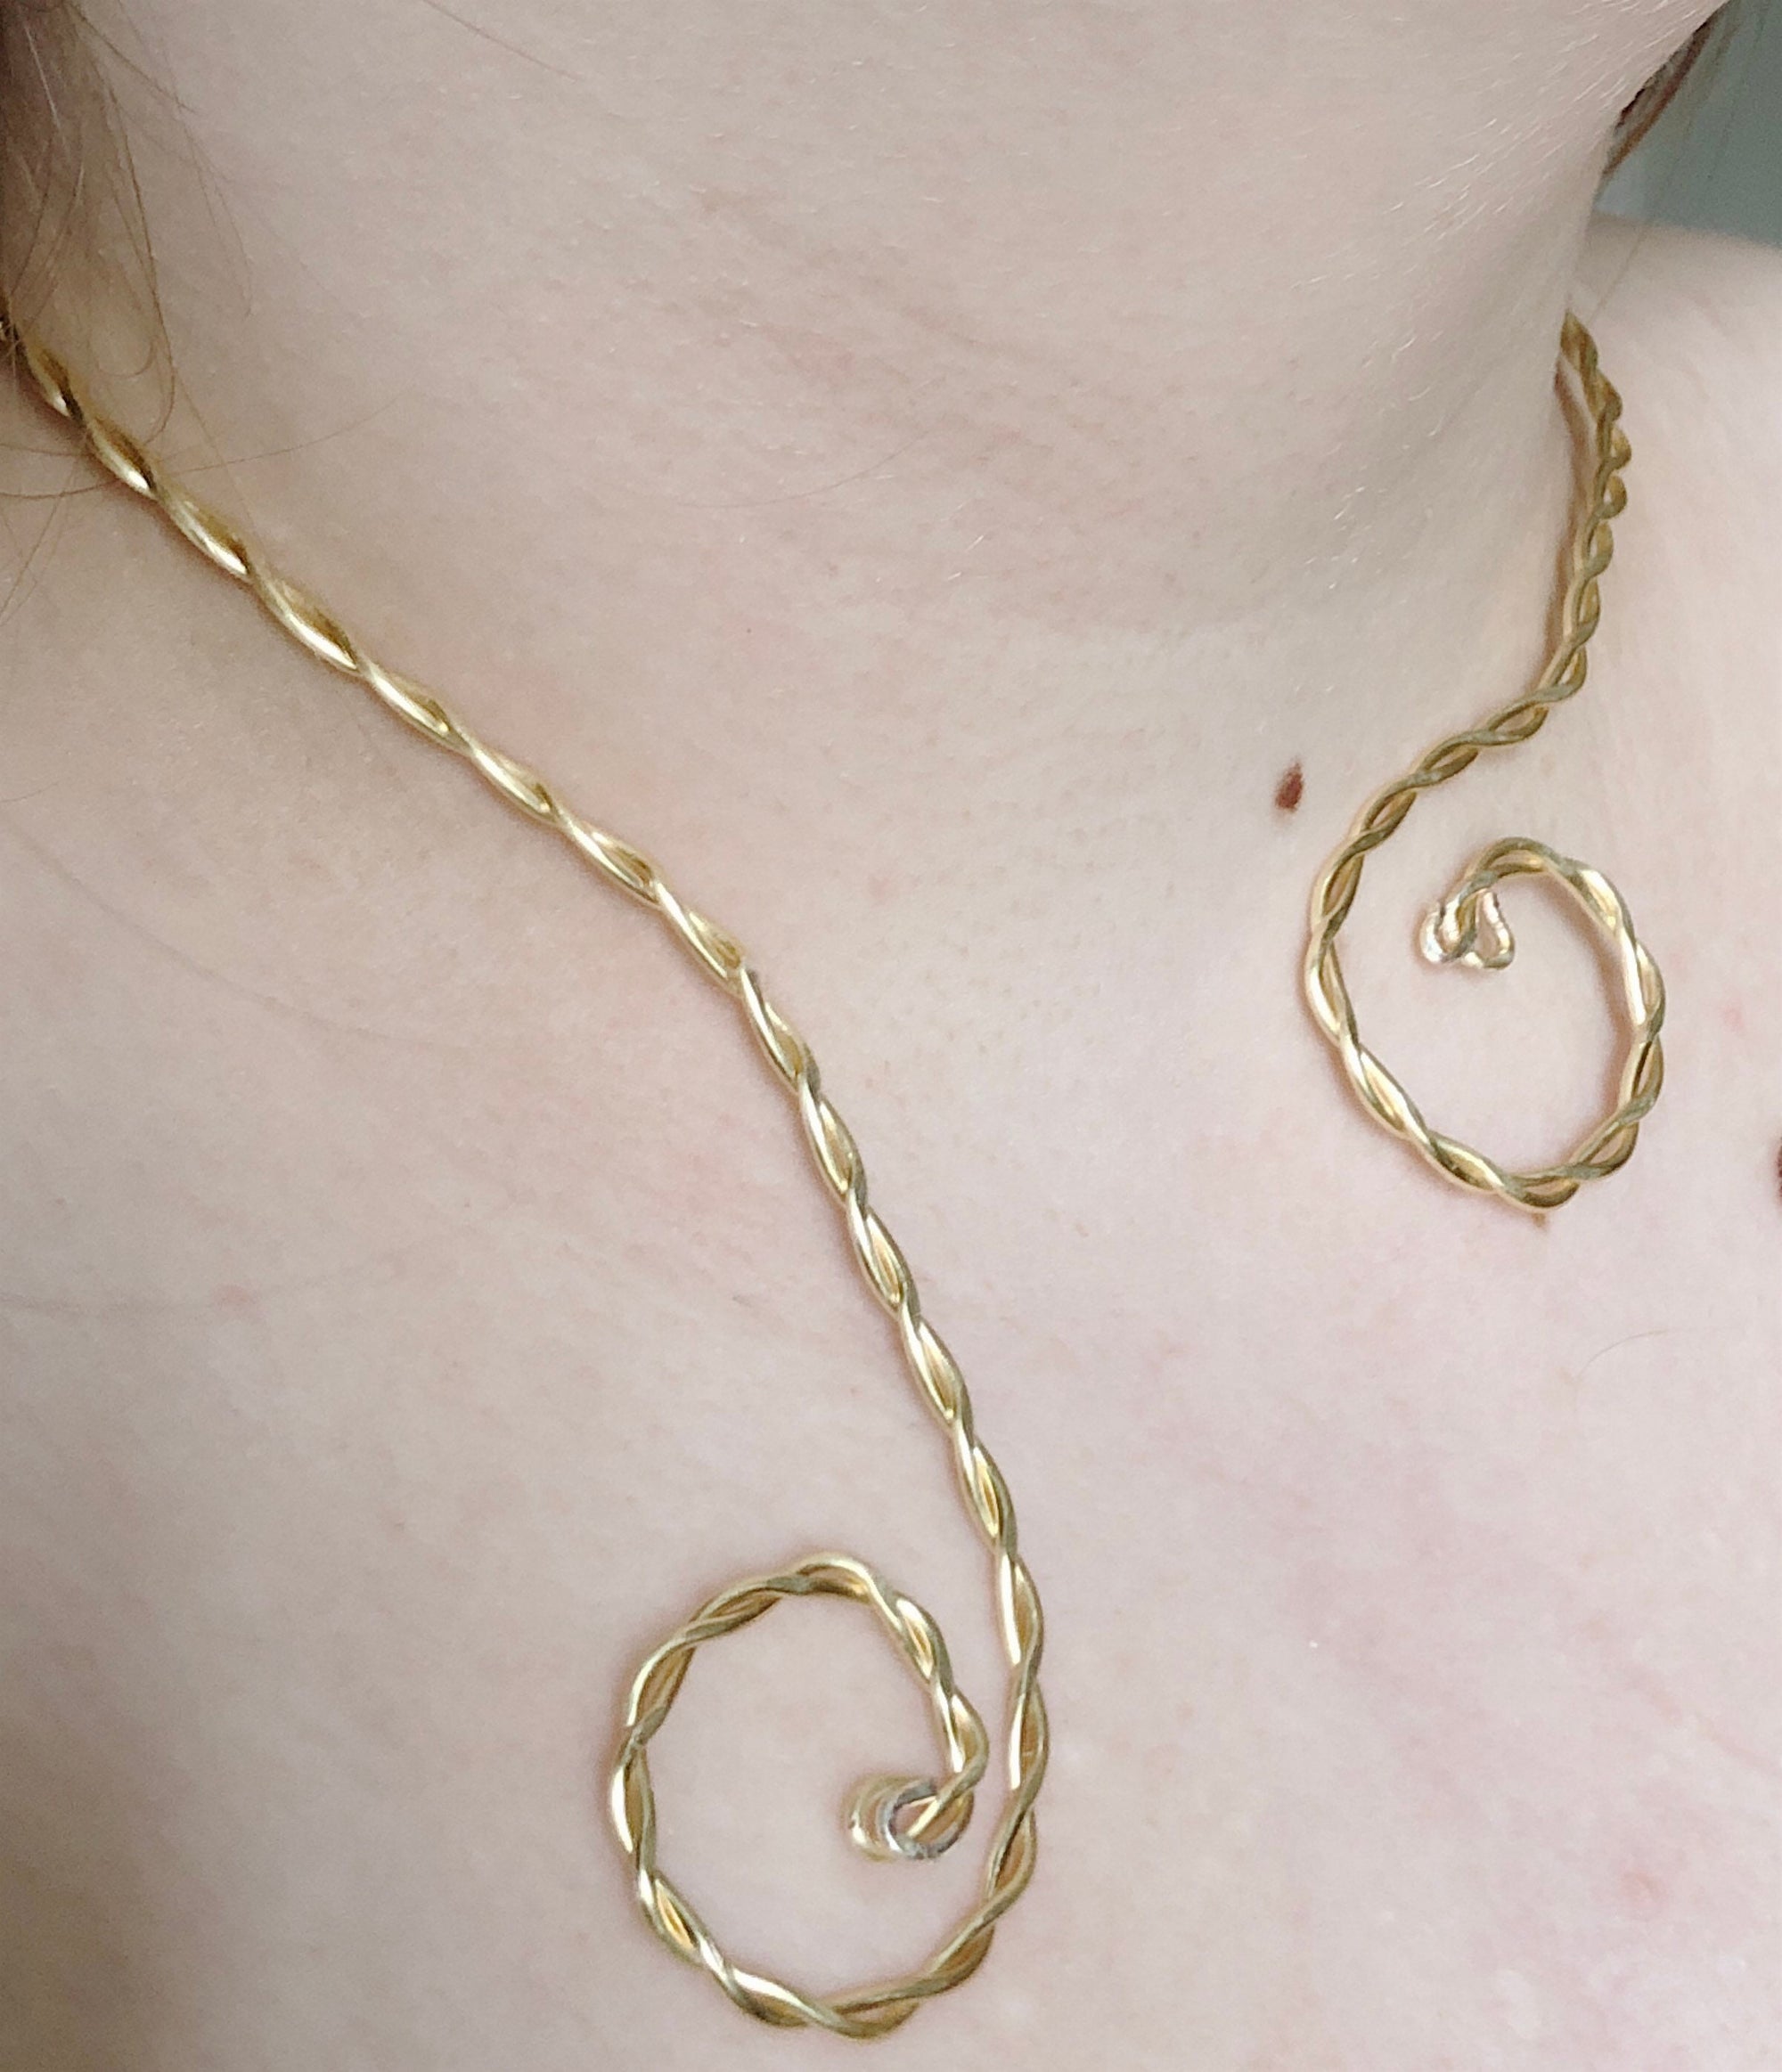 Open collar necklace, Metal choker Gold collar choker for women, Cuff necklace open choker, Norse jewelry celtic necklace